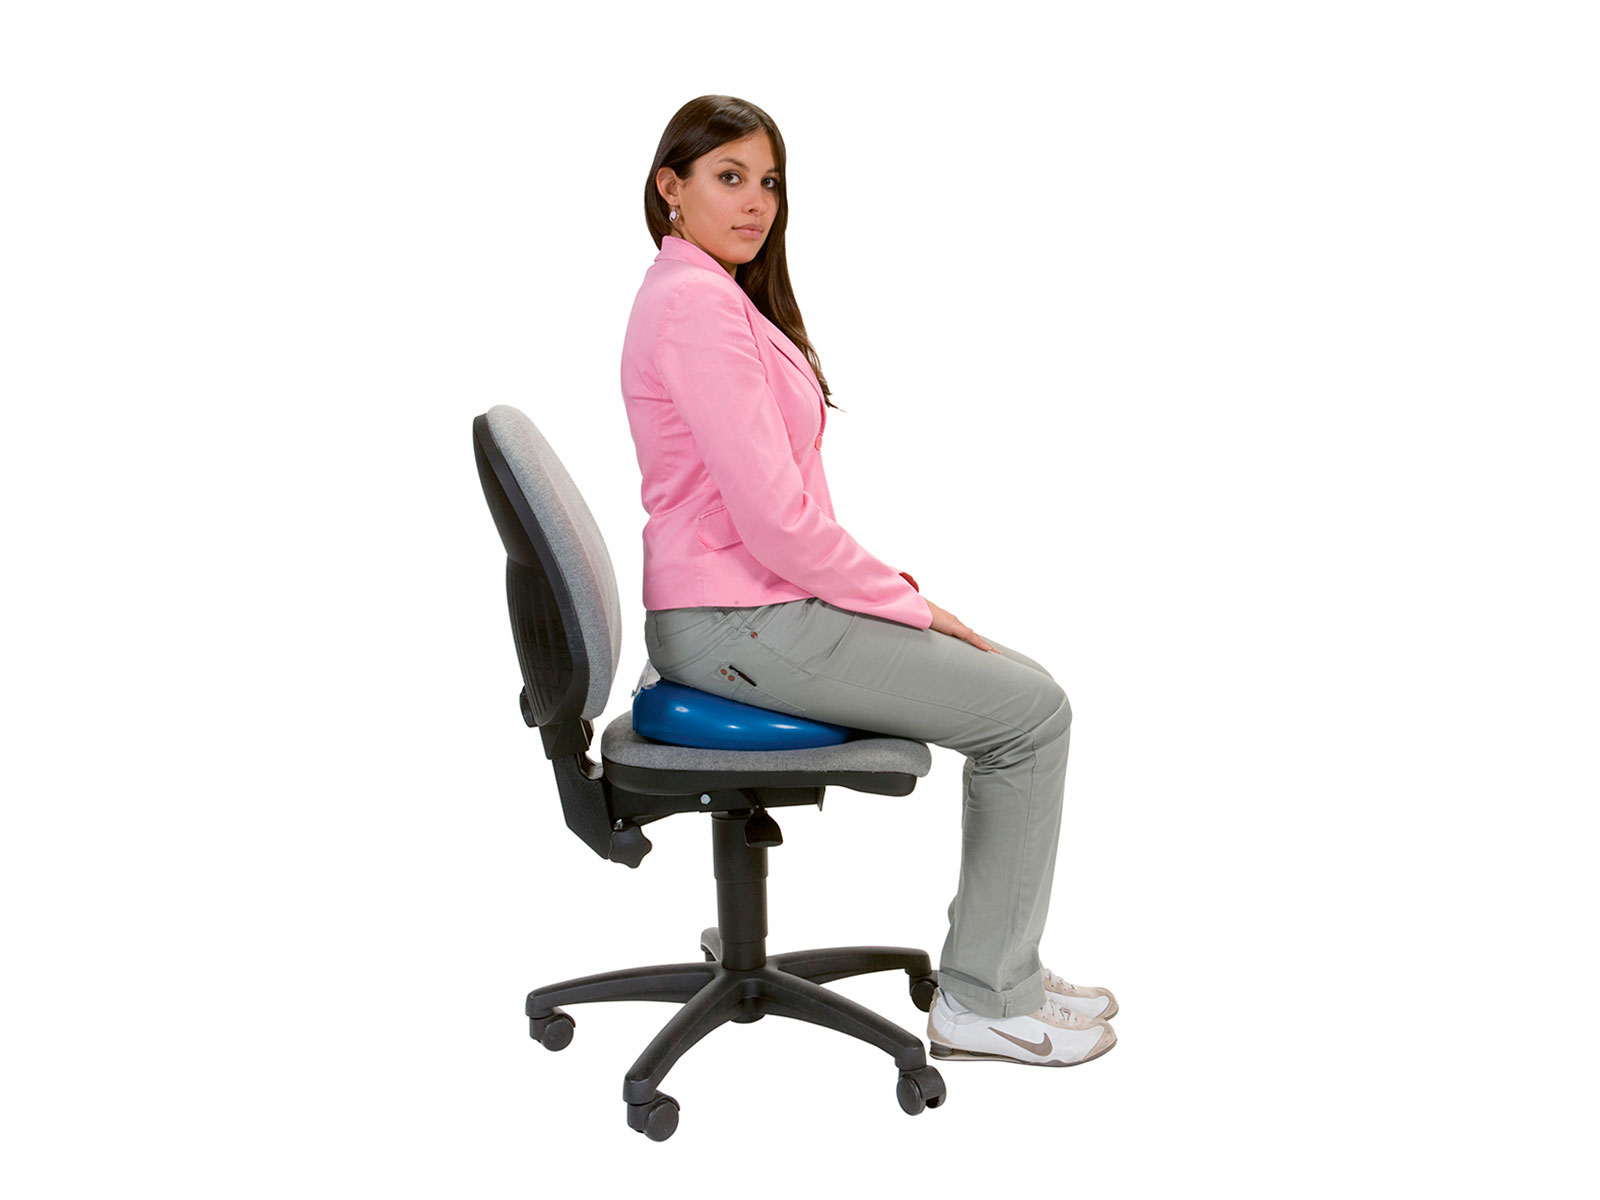 Sit'On'Air Seat Cushion, Seating Posture